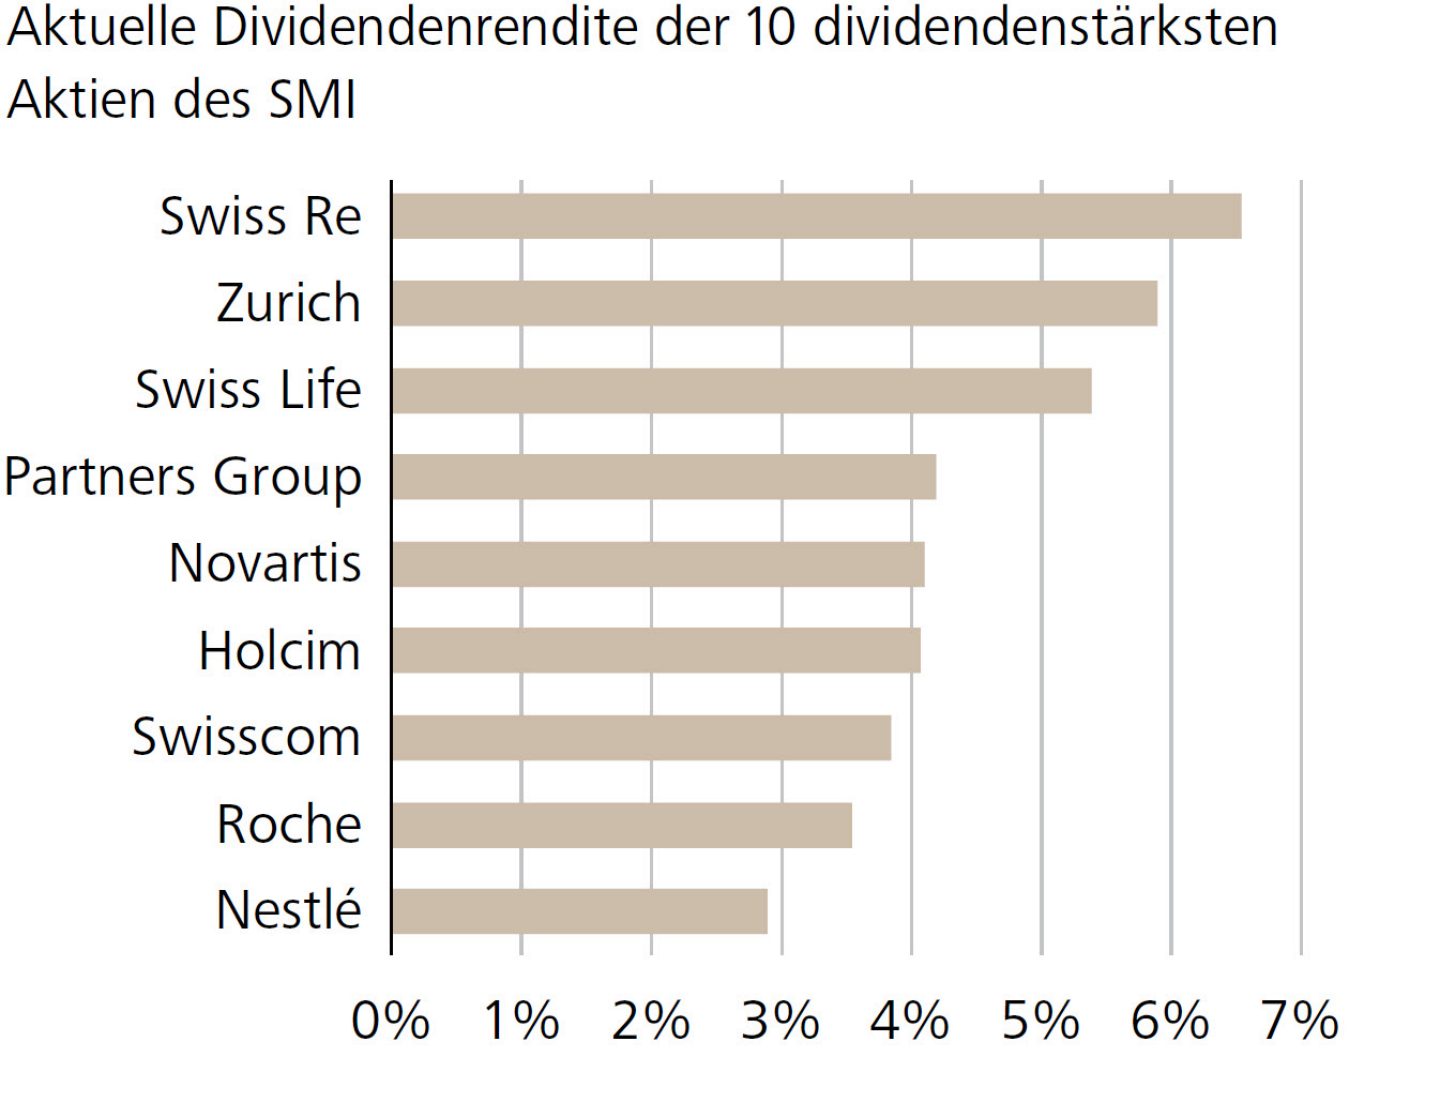 Aktuelle Dividendenrendite der 10 dividendenstärksten Aktien des SMI